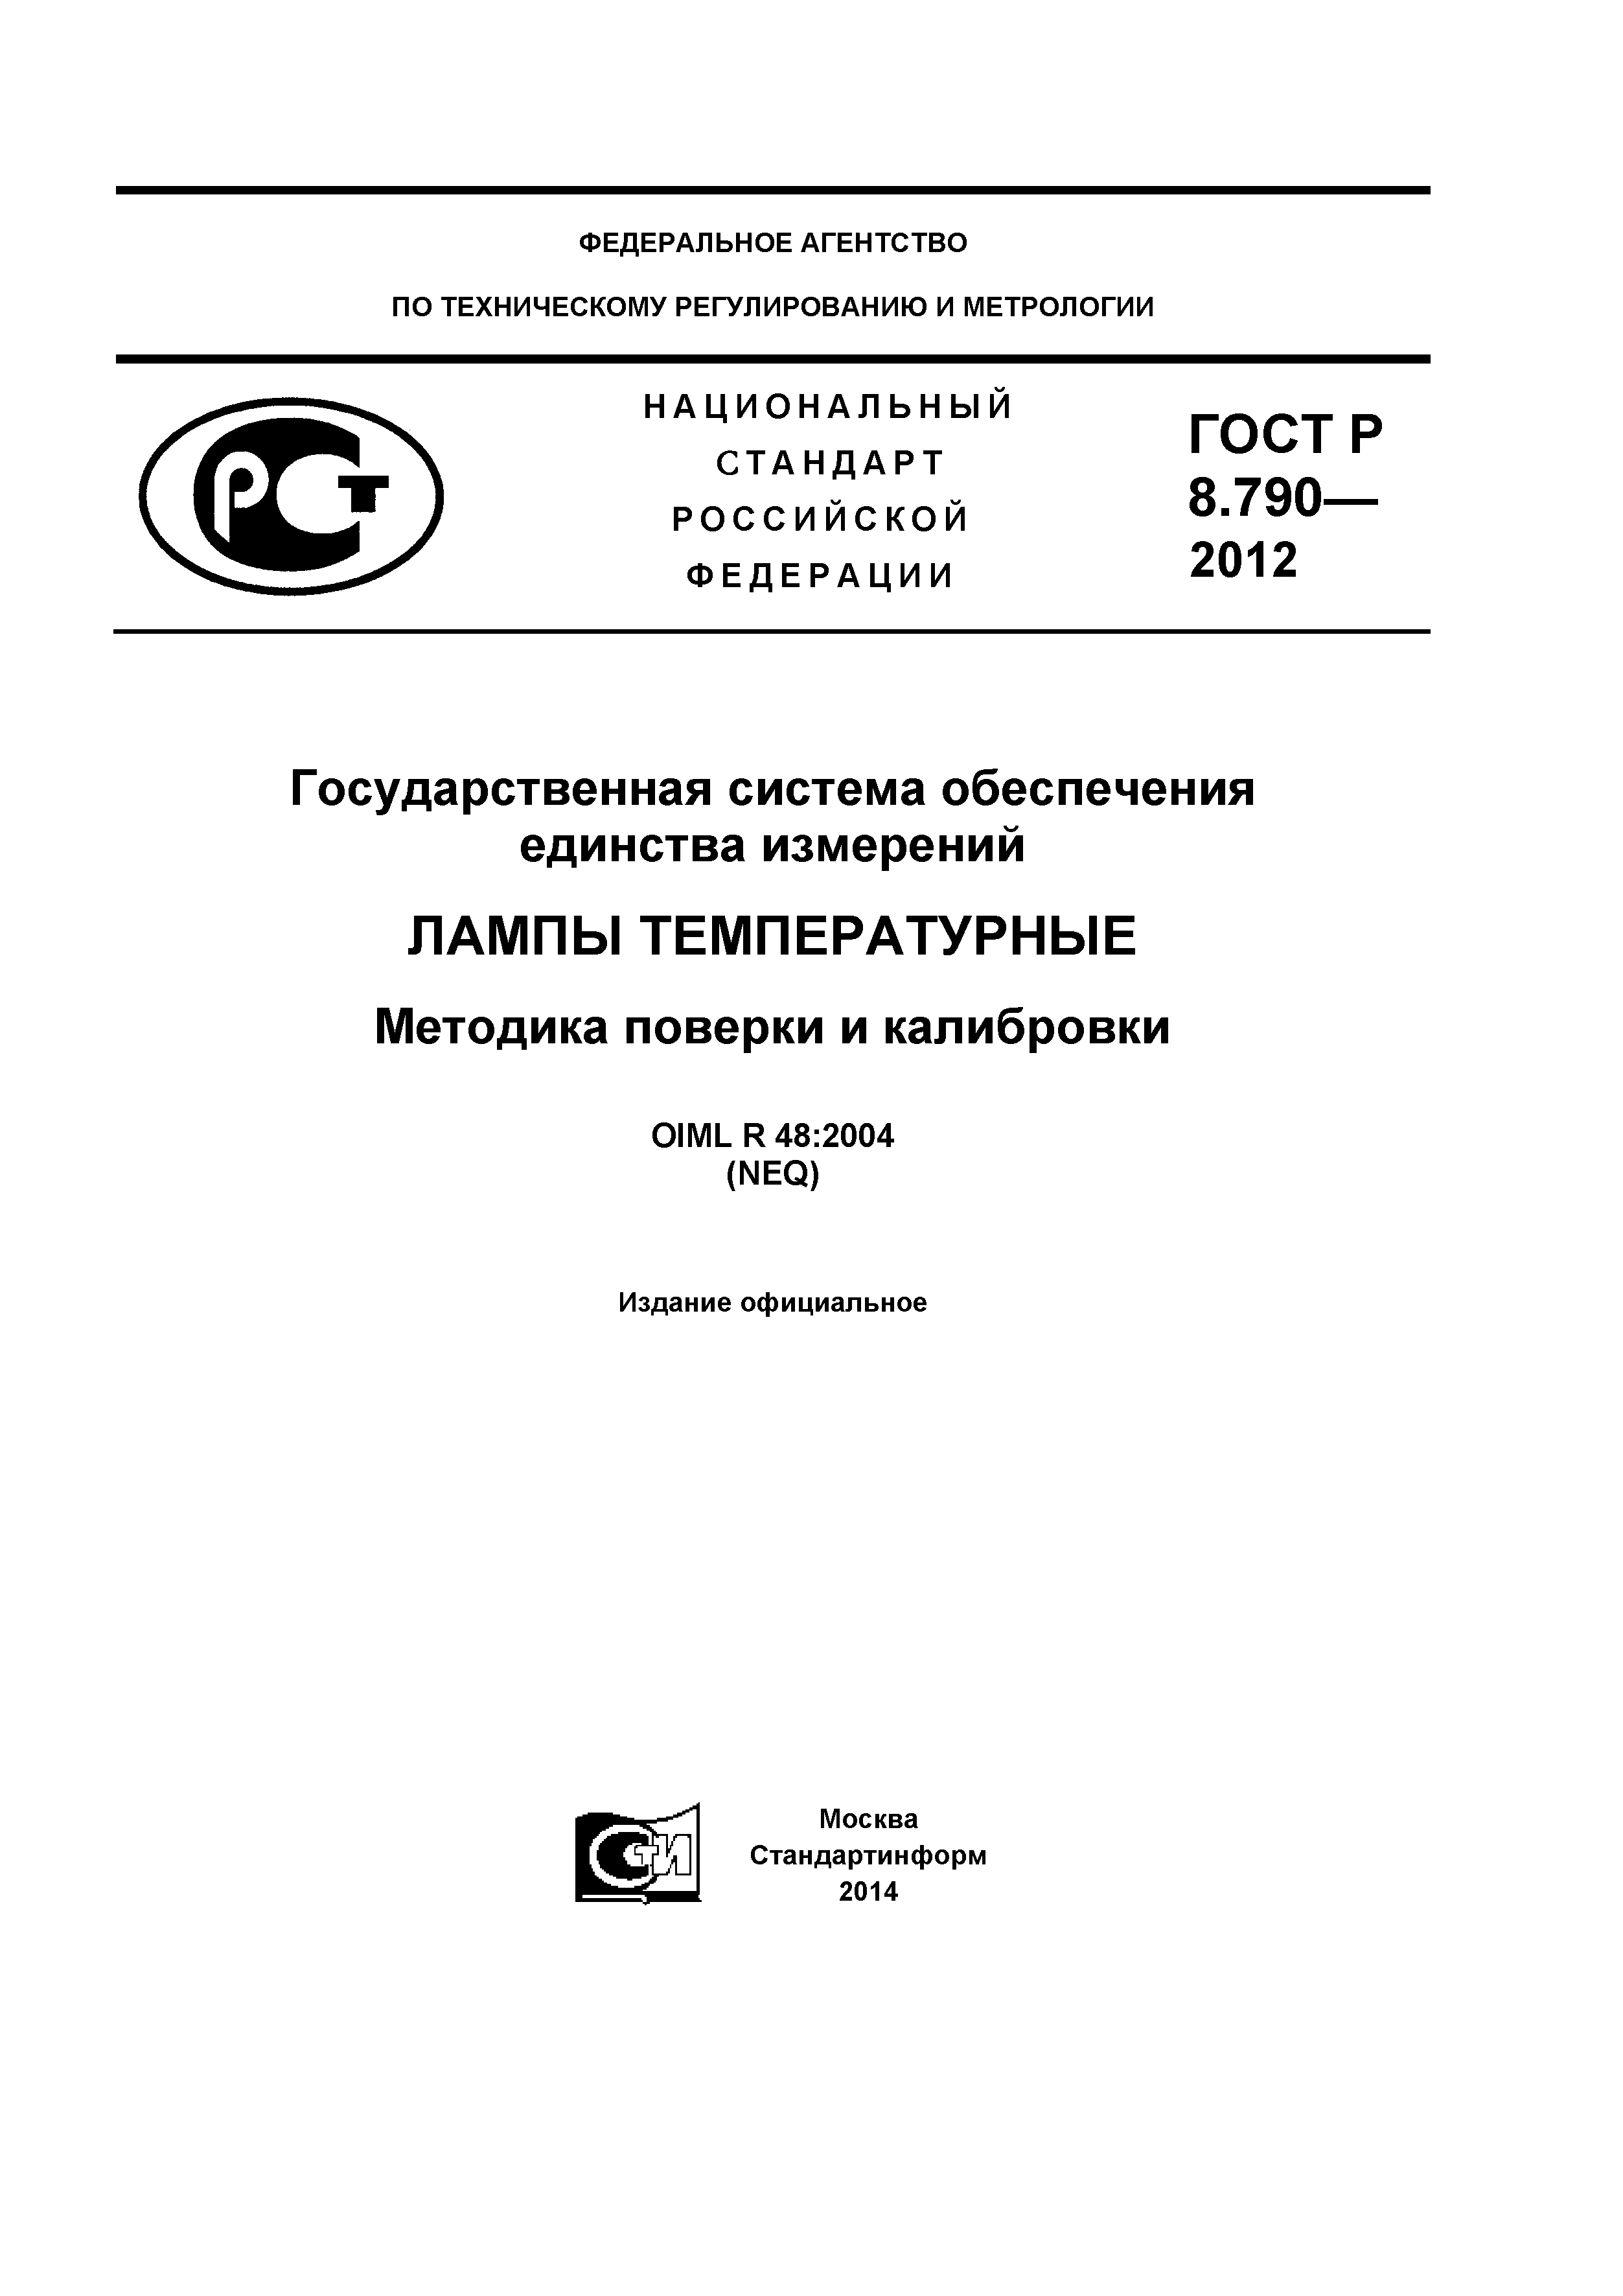 ГОСТ Р 8.790-2012